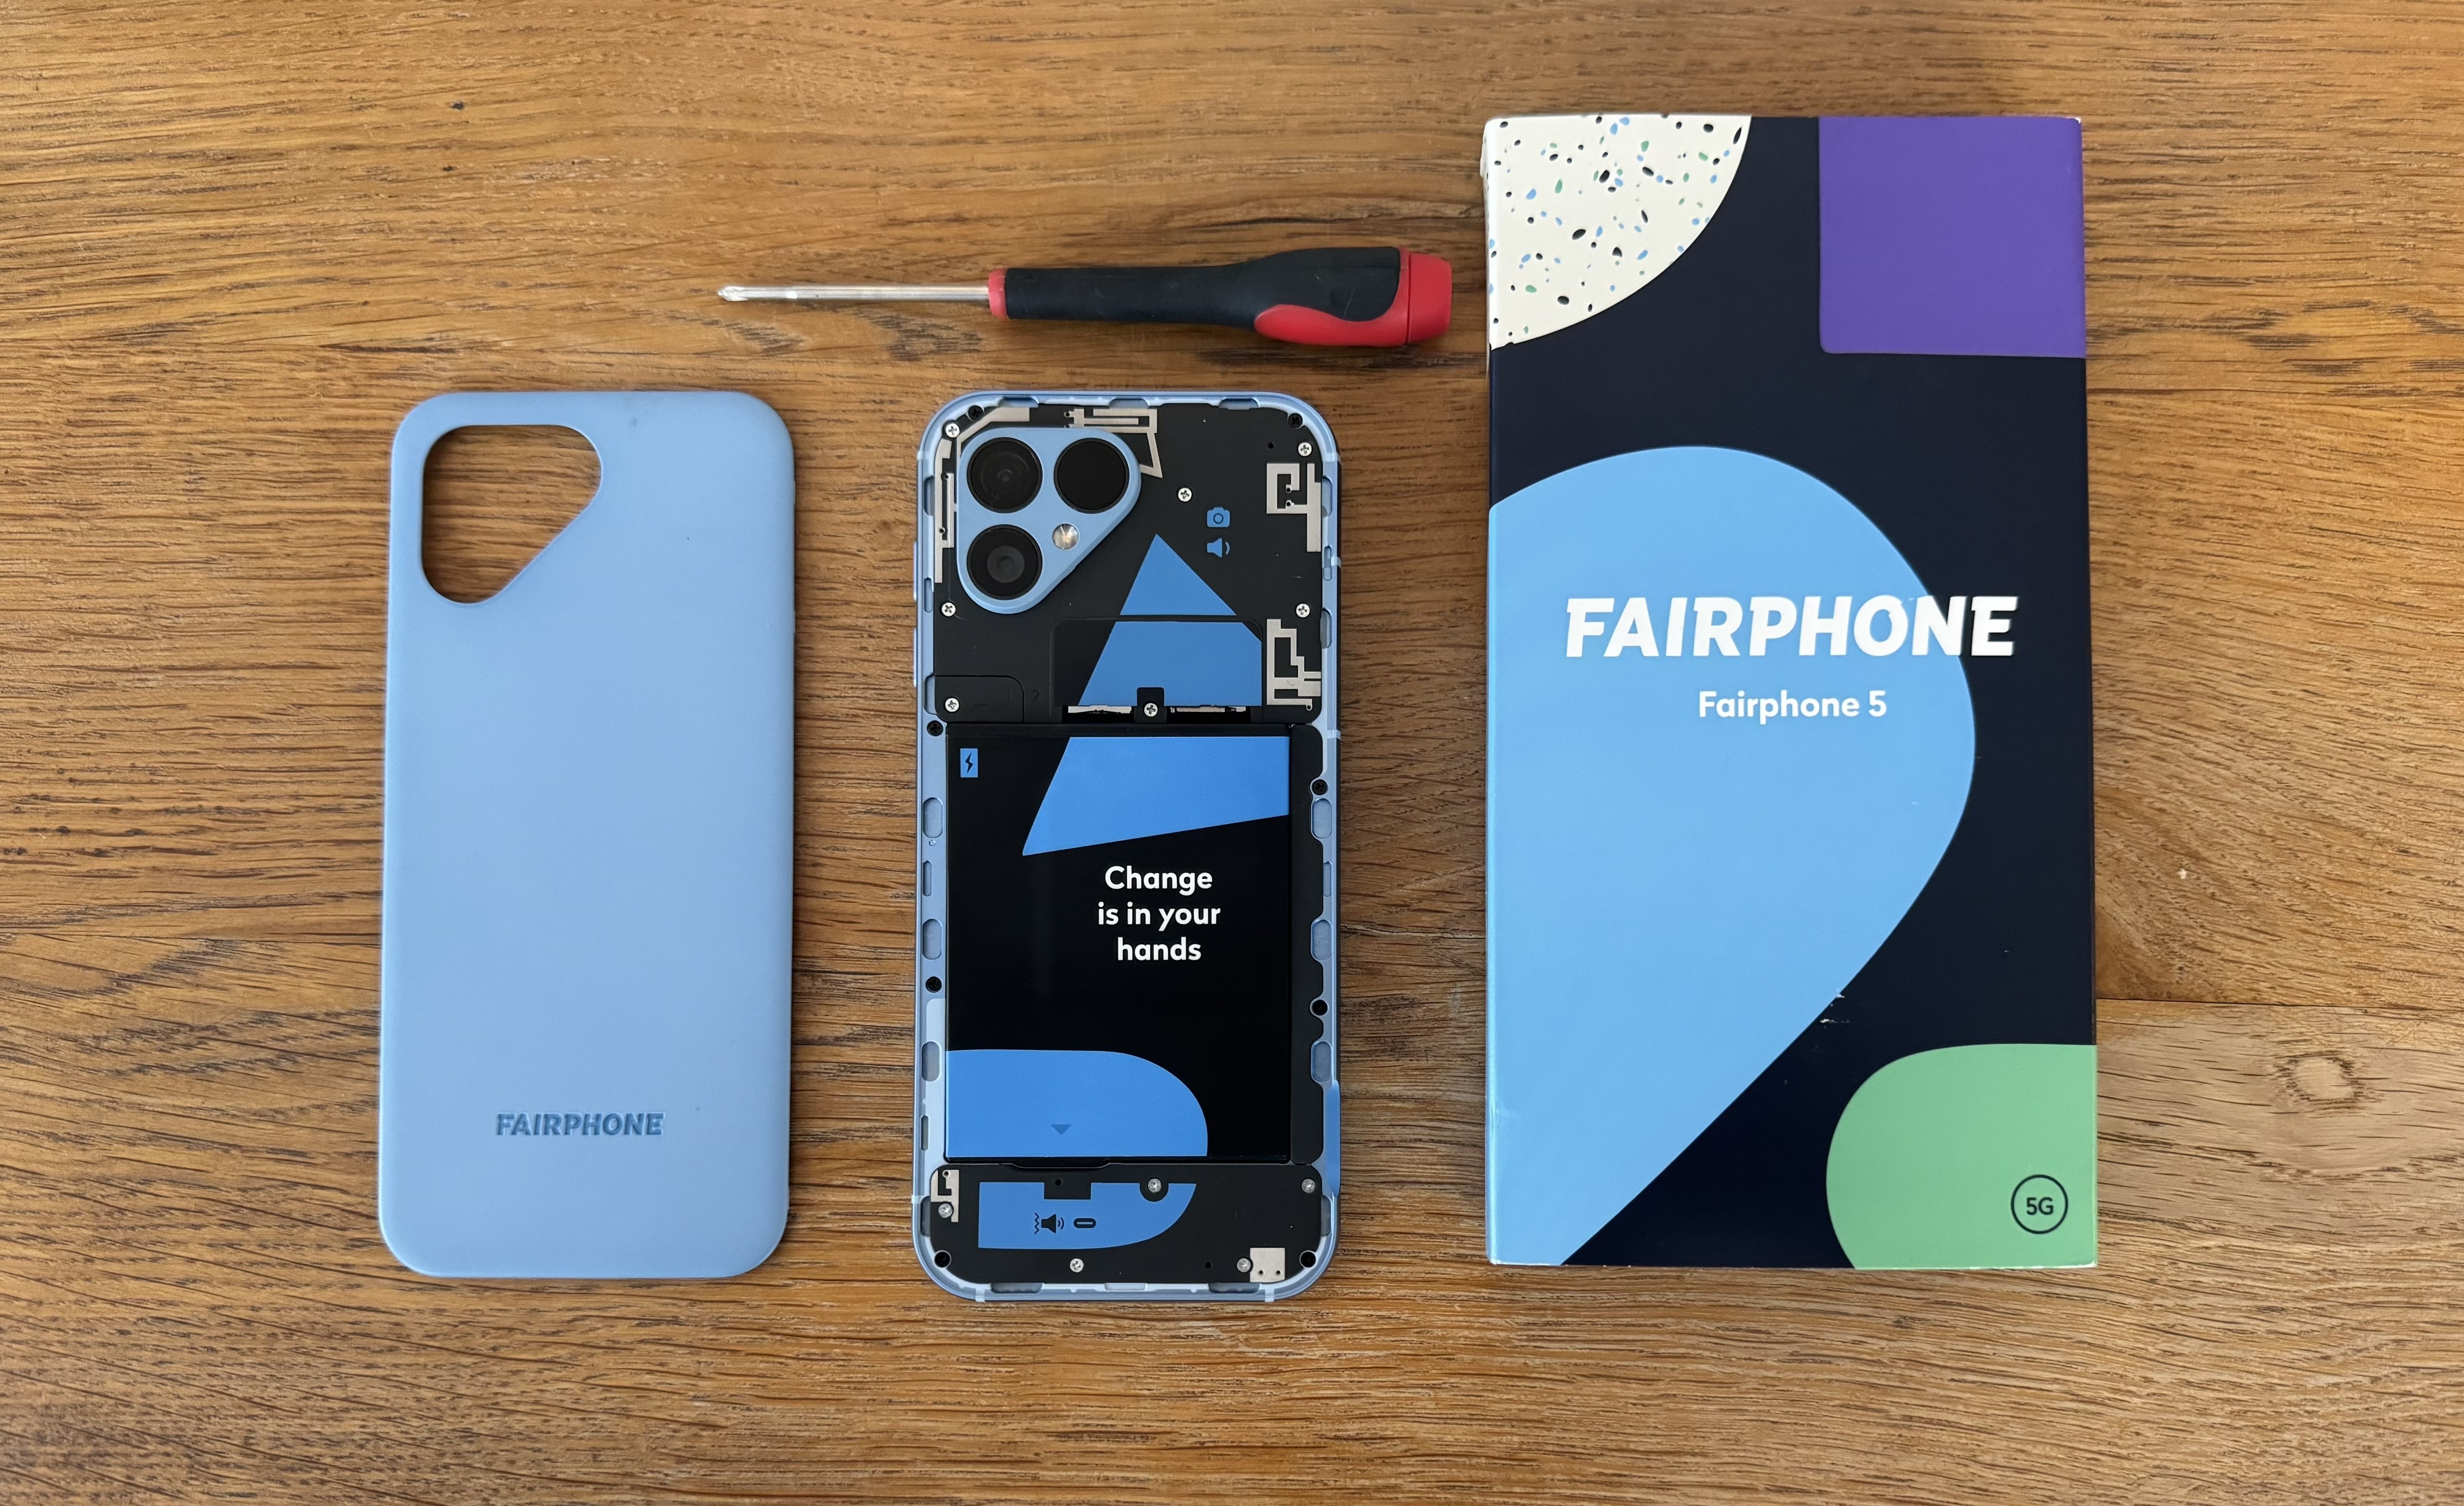 5 Test Fairphone Smartphone Fairphone